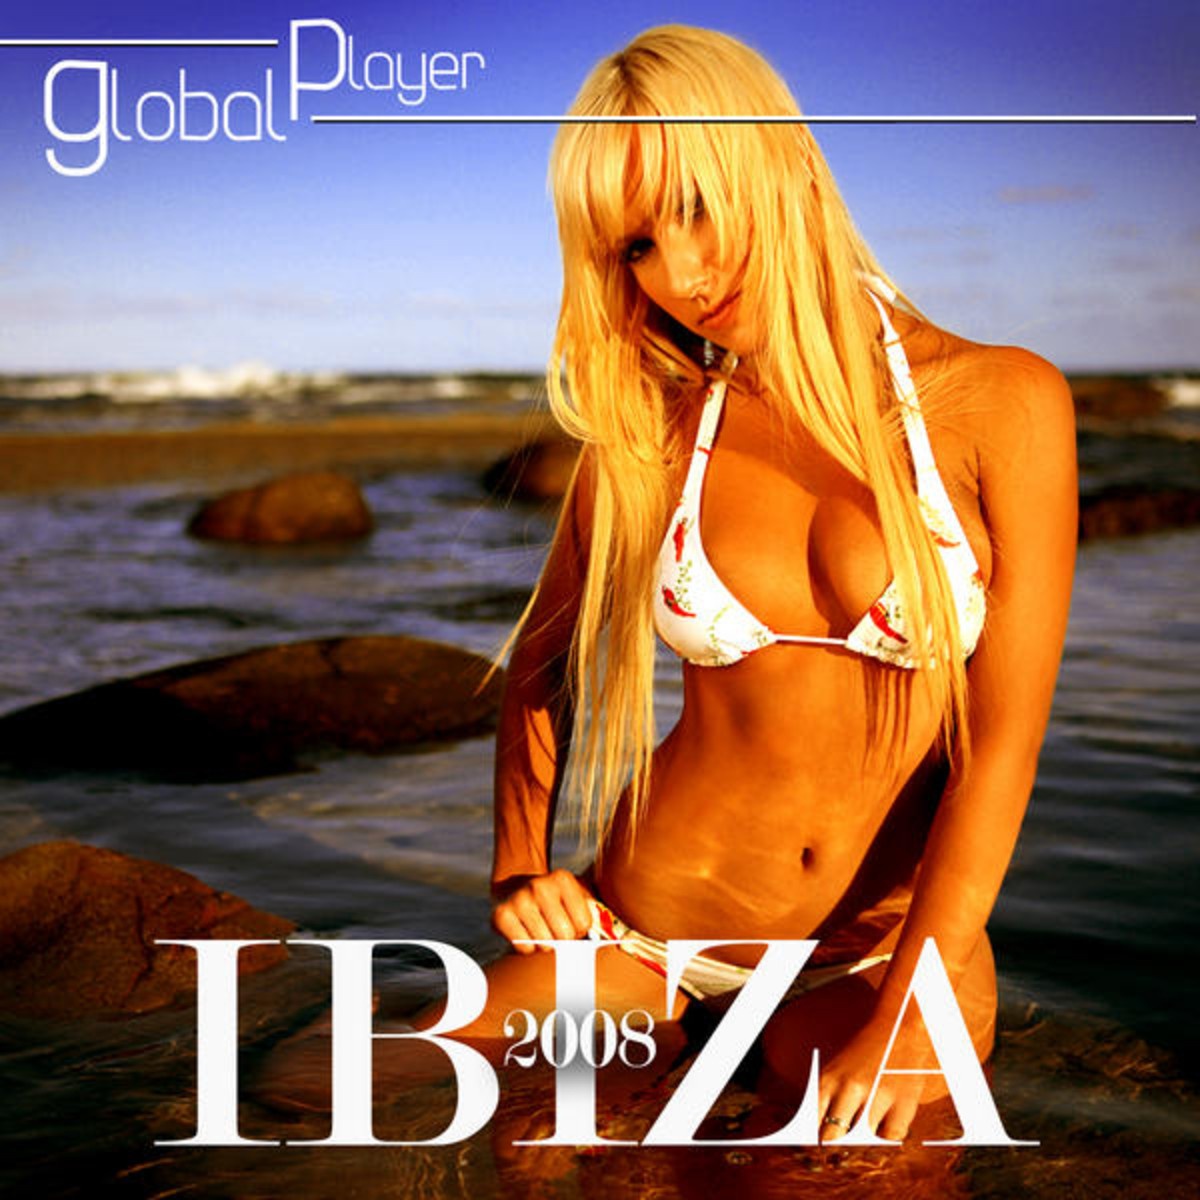 Global Player Ibiza 2008